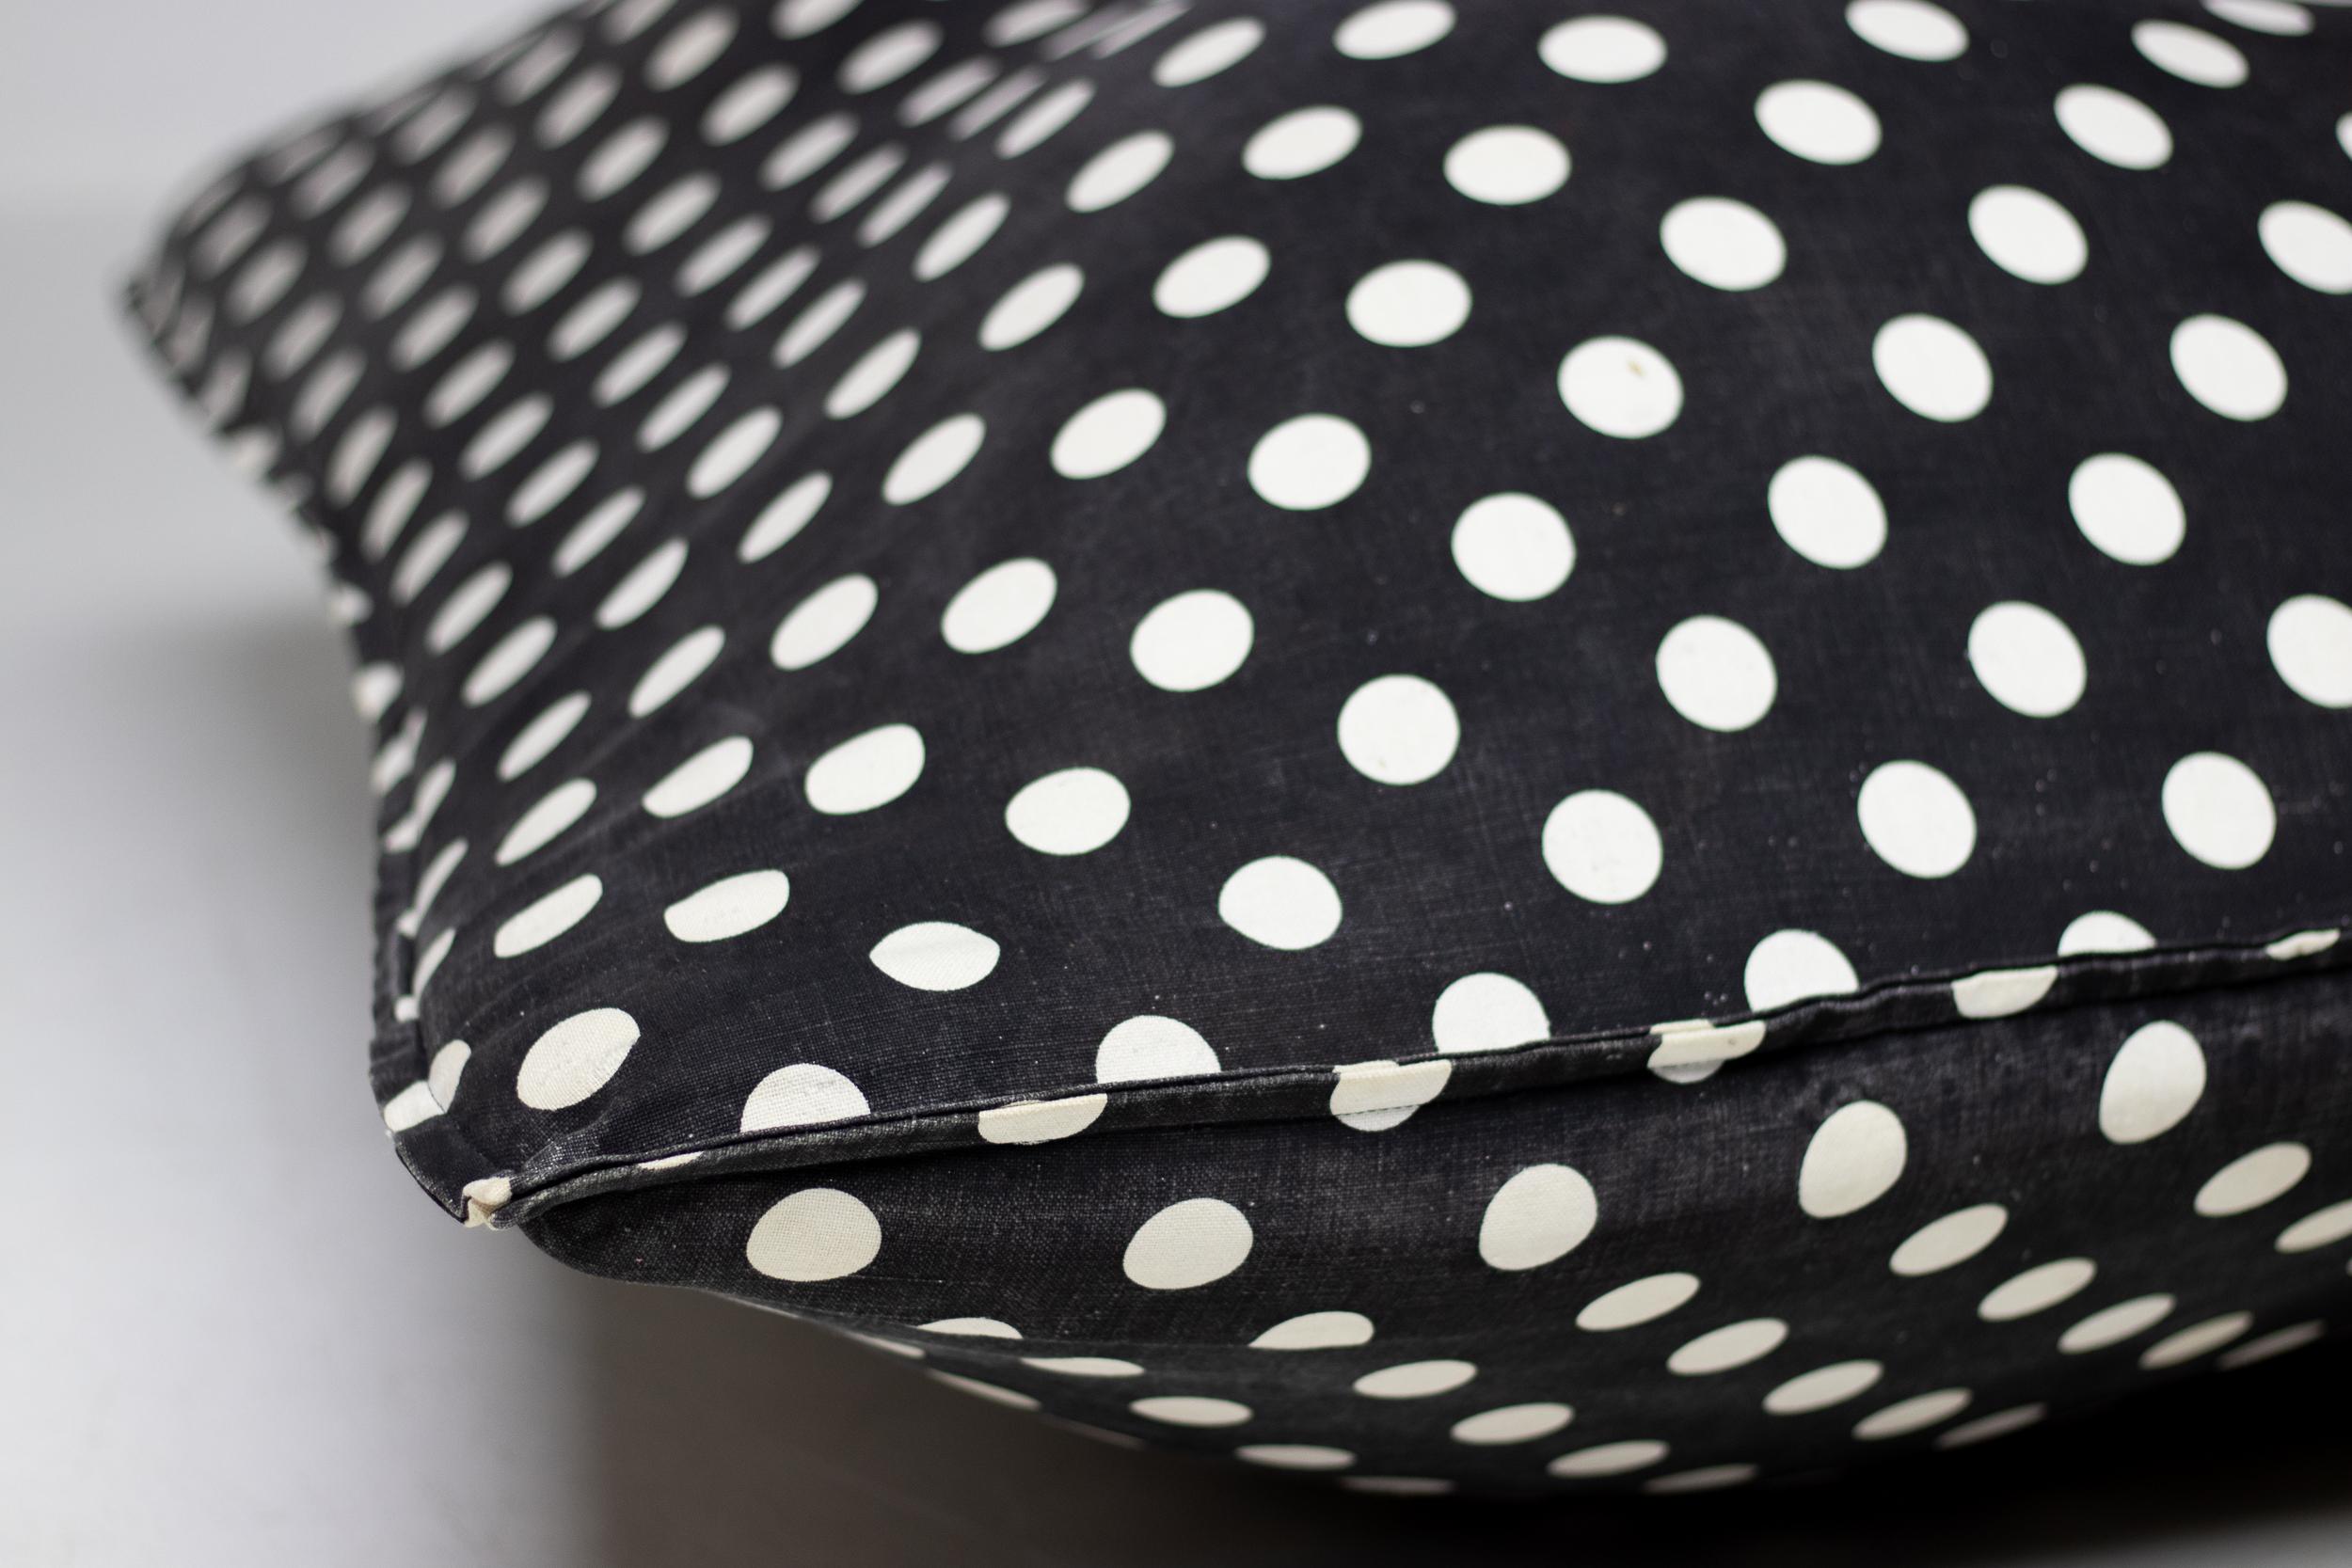 Gufram Giant Polka Dot Cushion In Fair Condition For Sale In Dronten, NL